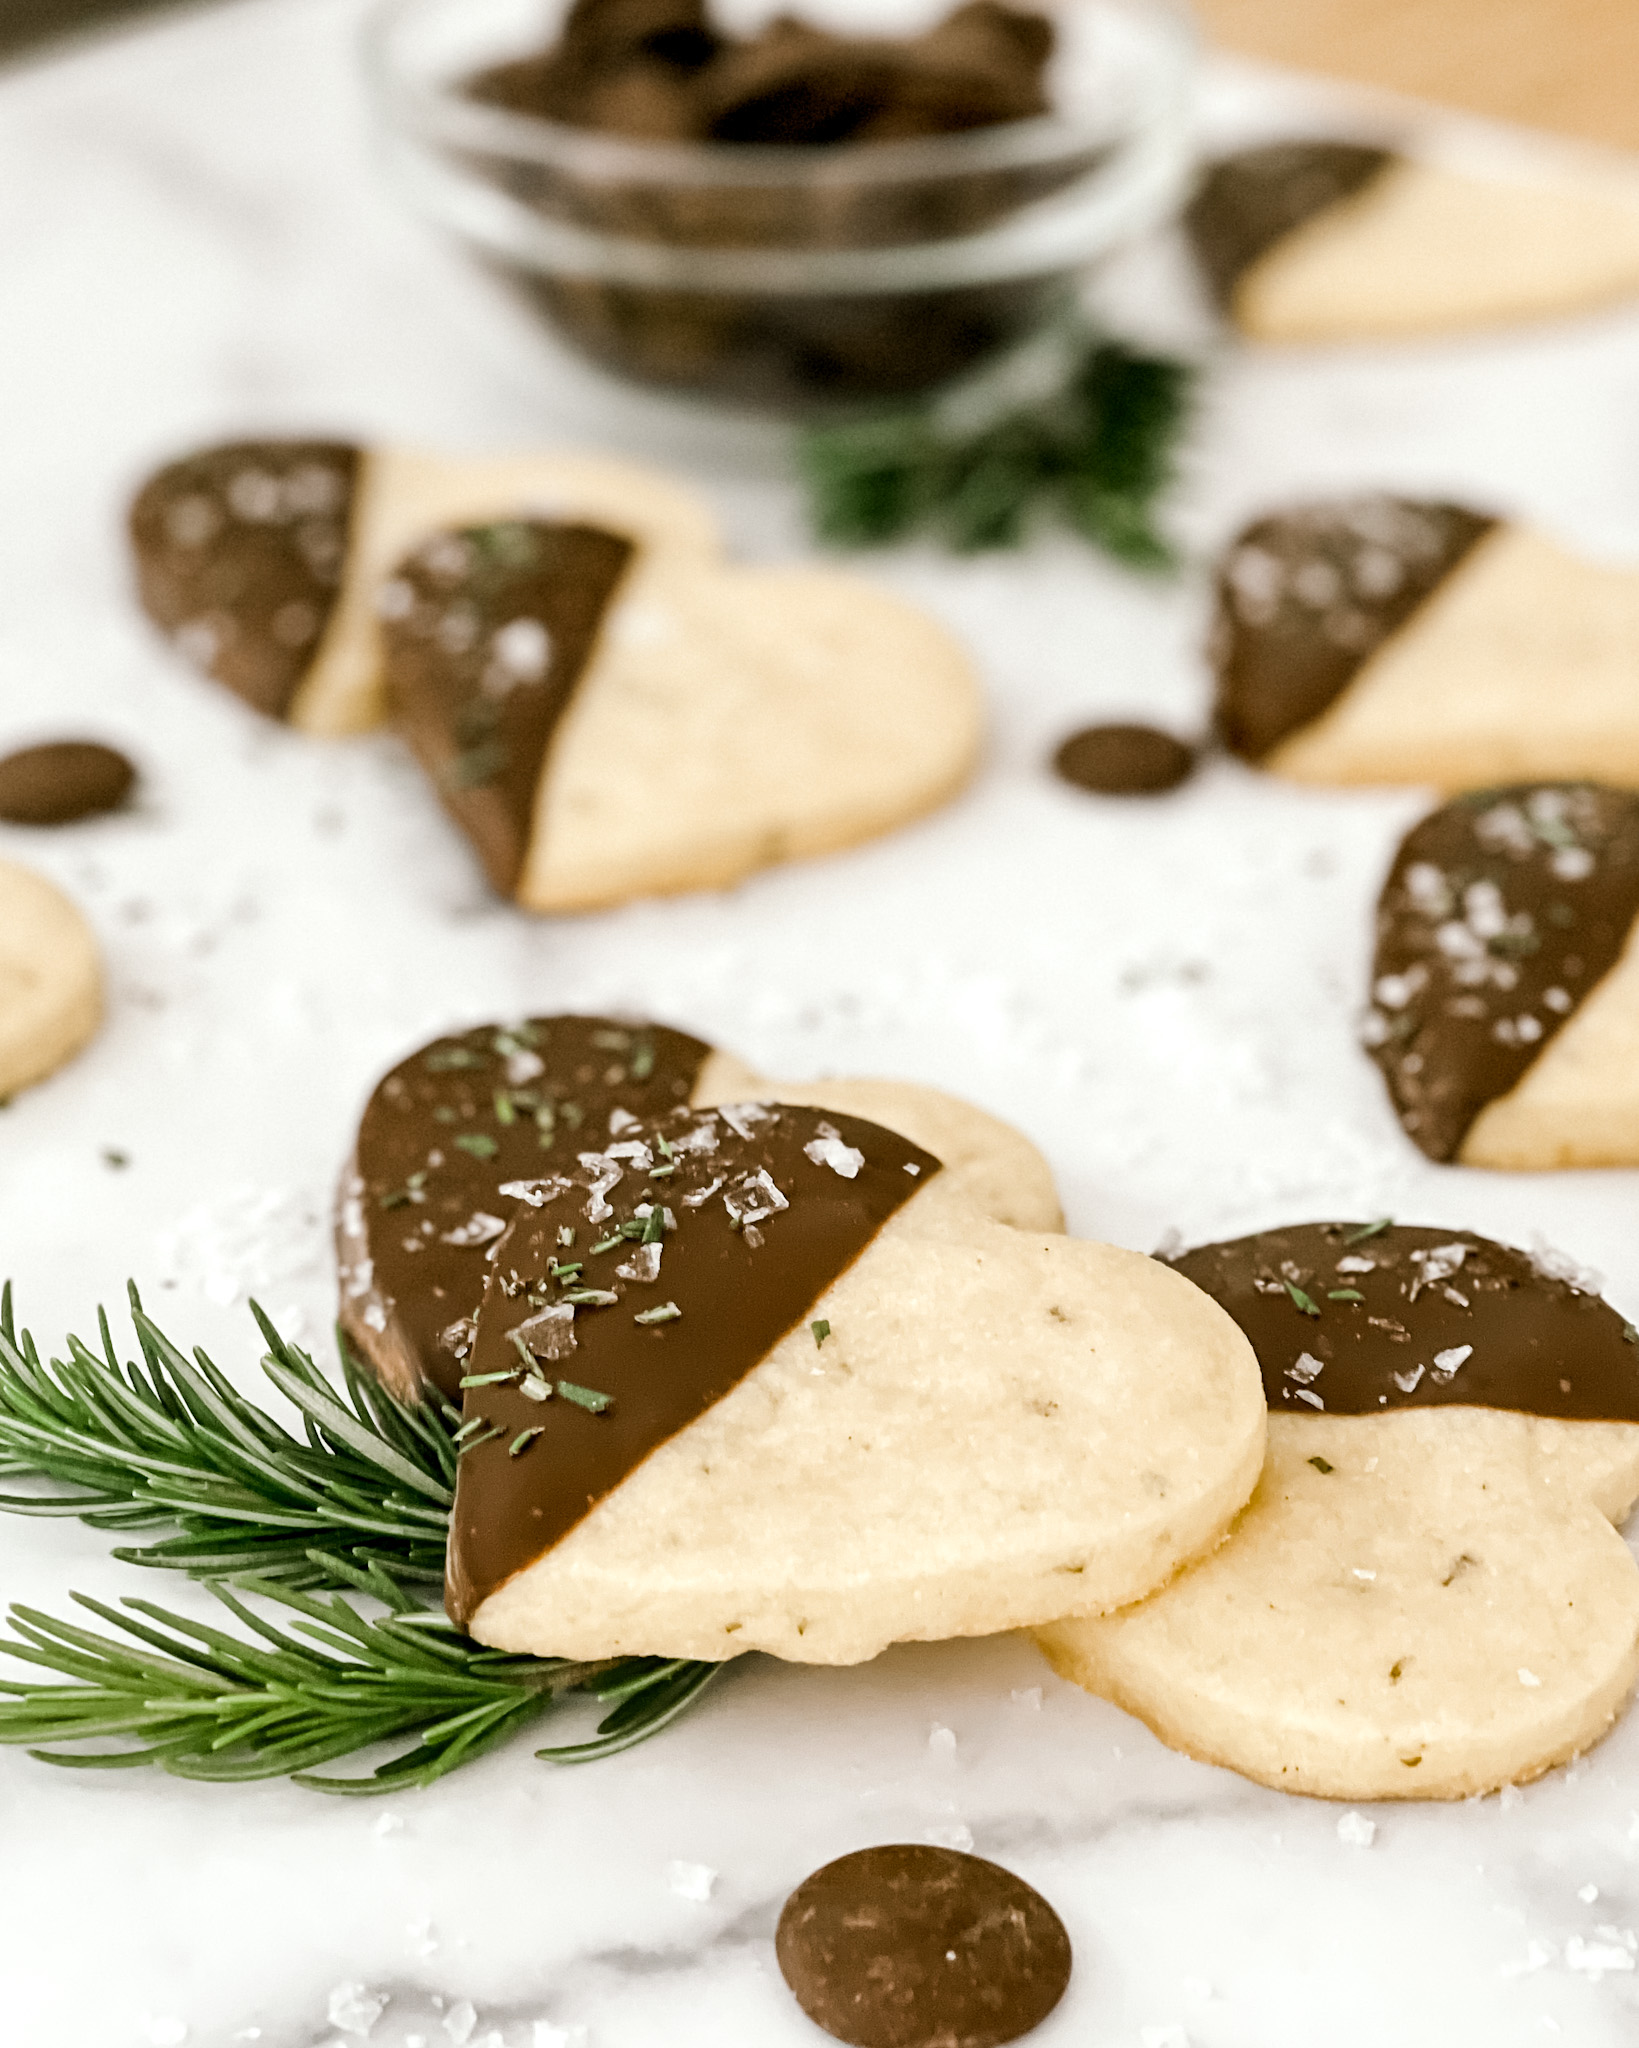 Easy Chocolate Shortbread Cookies Recipe